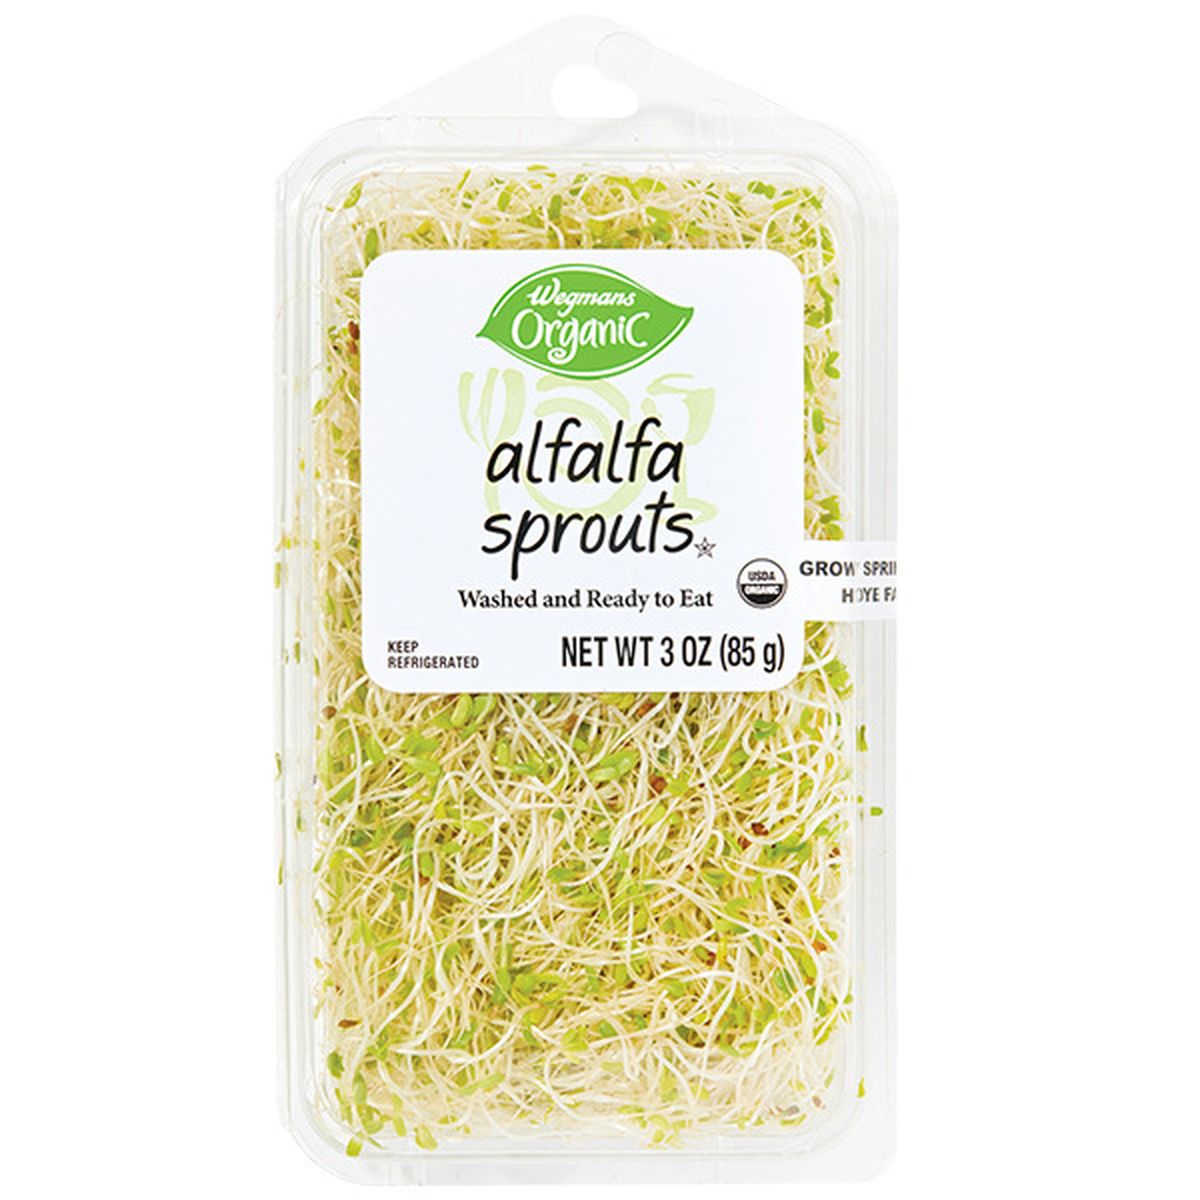 Calories in Wegmans Organic Alfalfa Sprouts